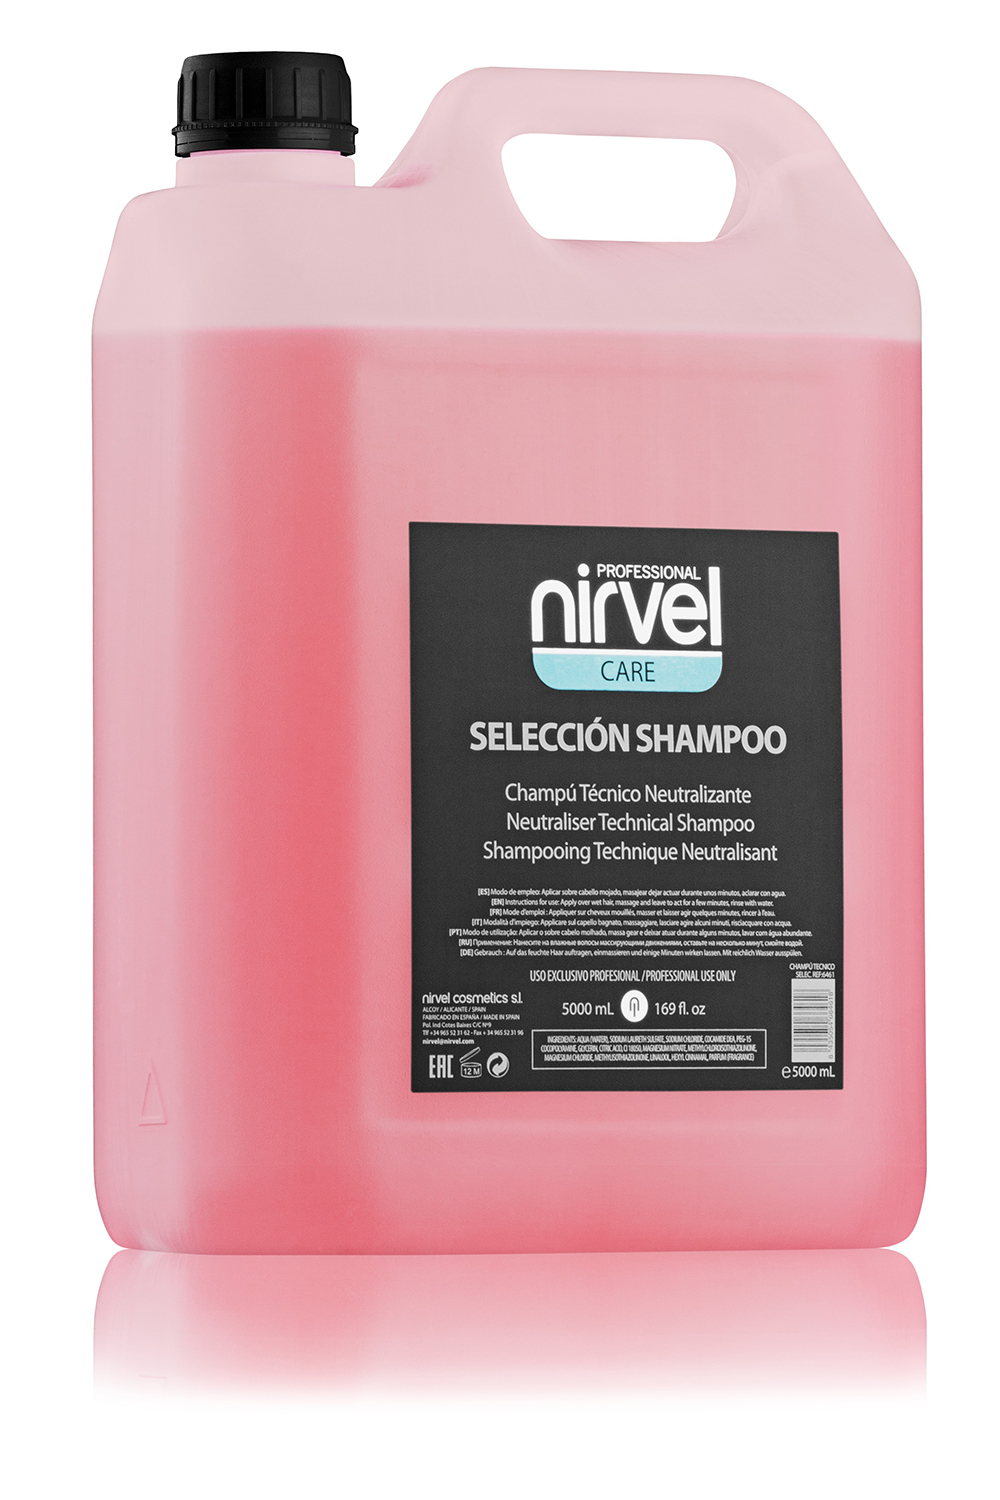 NIRVEL PROFESSIONAL Шампунь технический после окрашивания, химической завивки, обесцвечивания / NEUTRALISING TECHNICAL SHAMPOO 5000 мл kapous лосьон для химической завивки волос 2 helix perm 500 мл